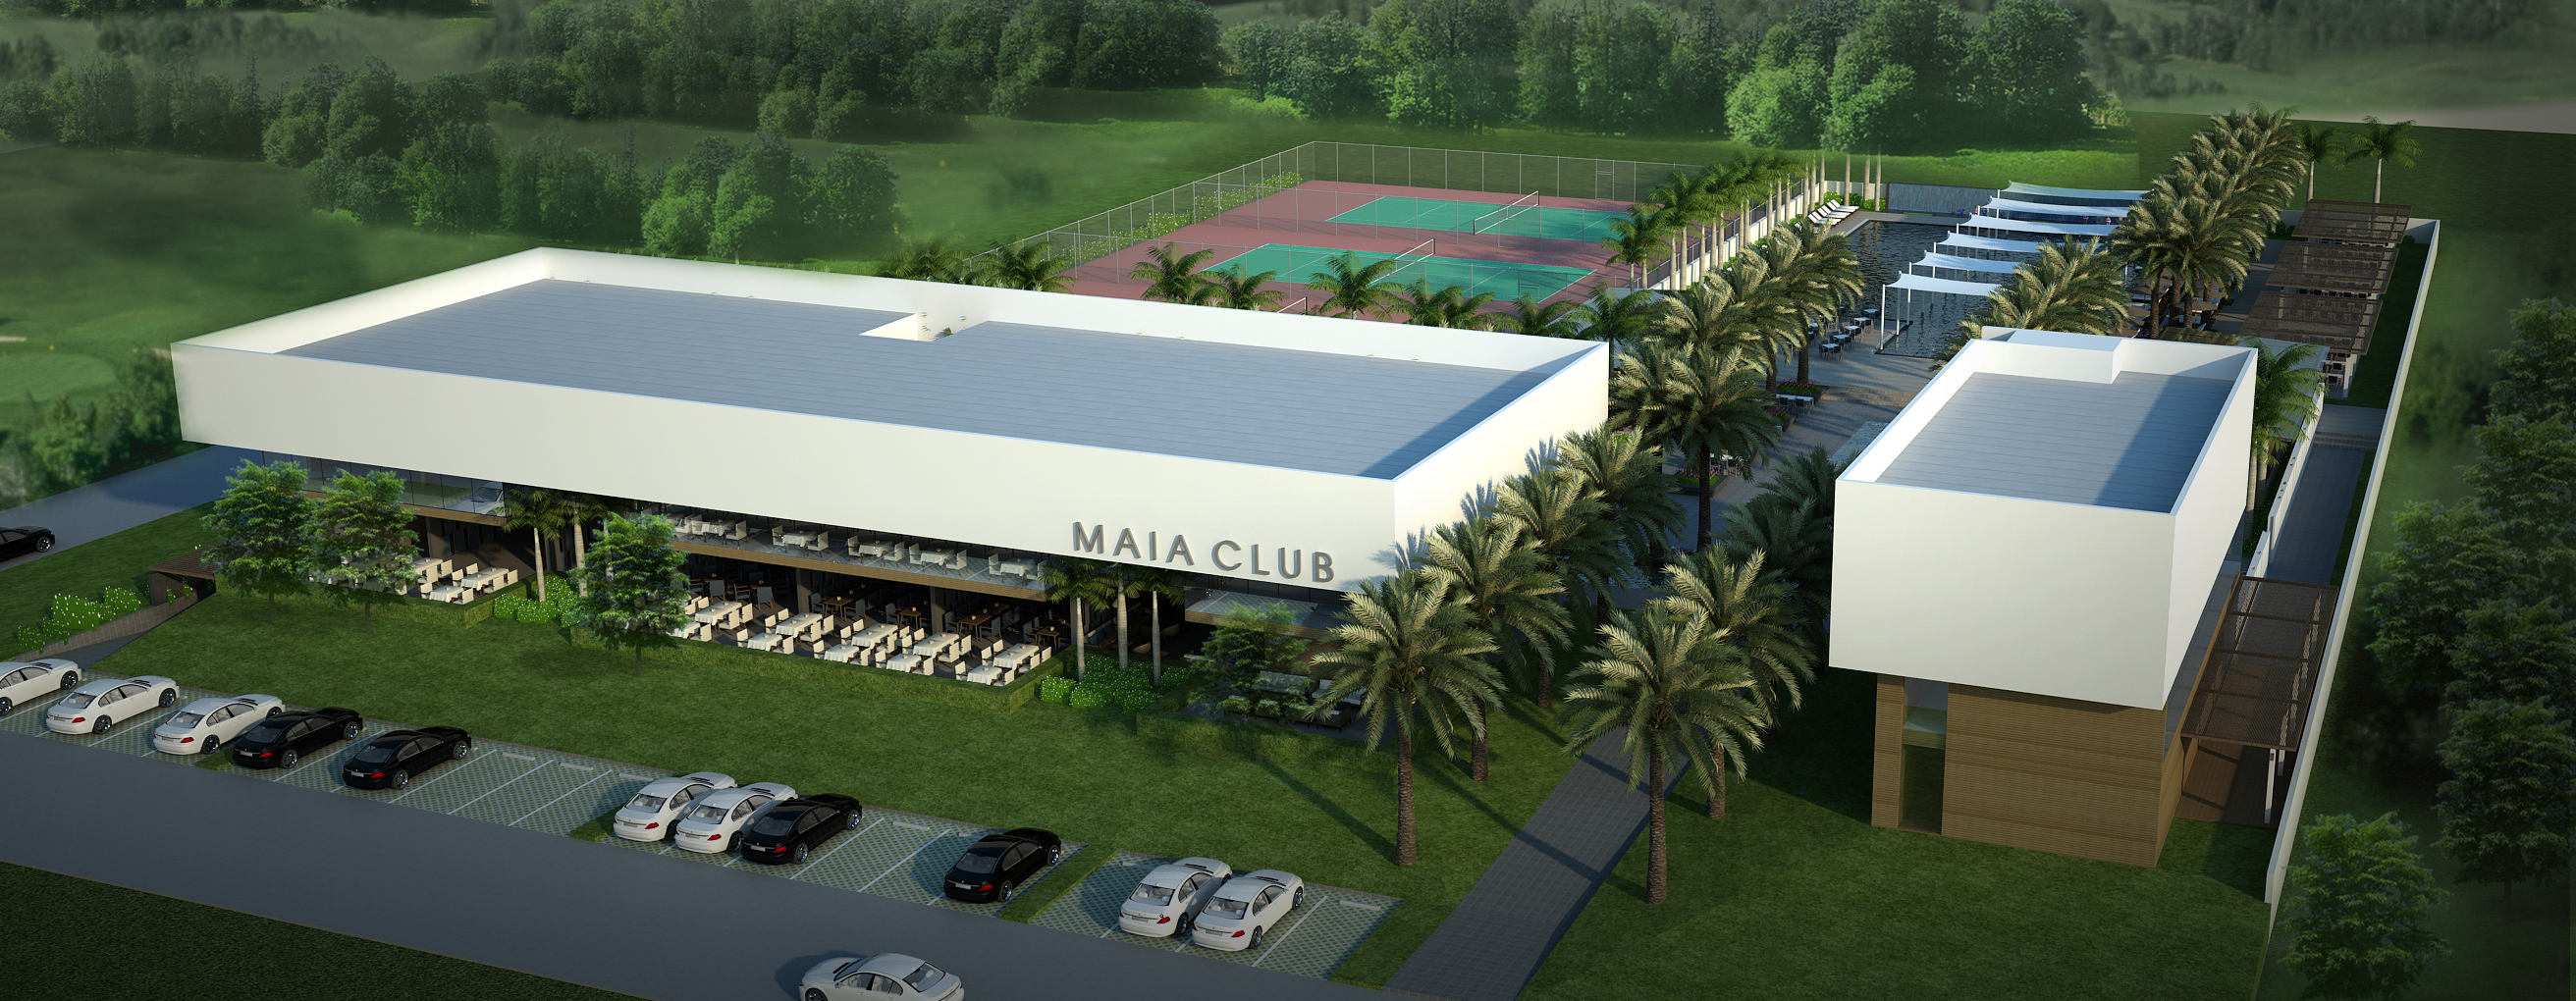 MAIA CLUB